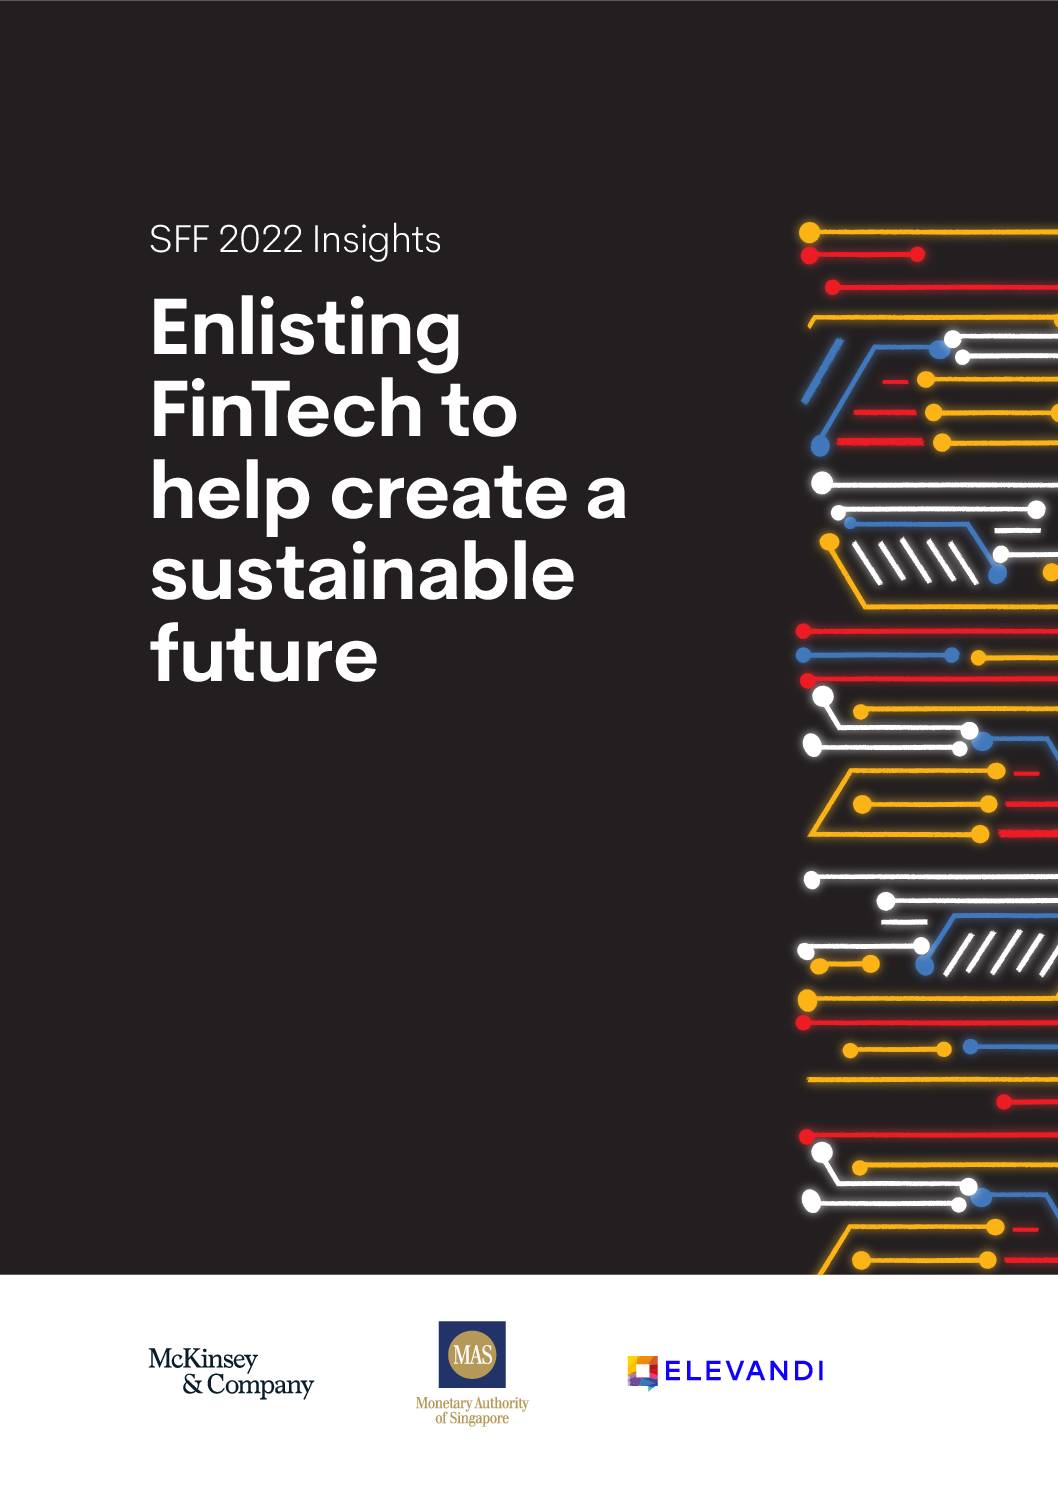 SFF2022_FinTech-to-create-sustainable-future_Mckinsey-pdf